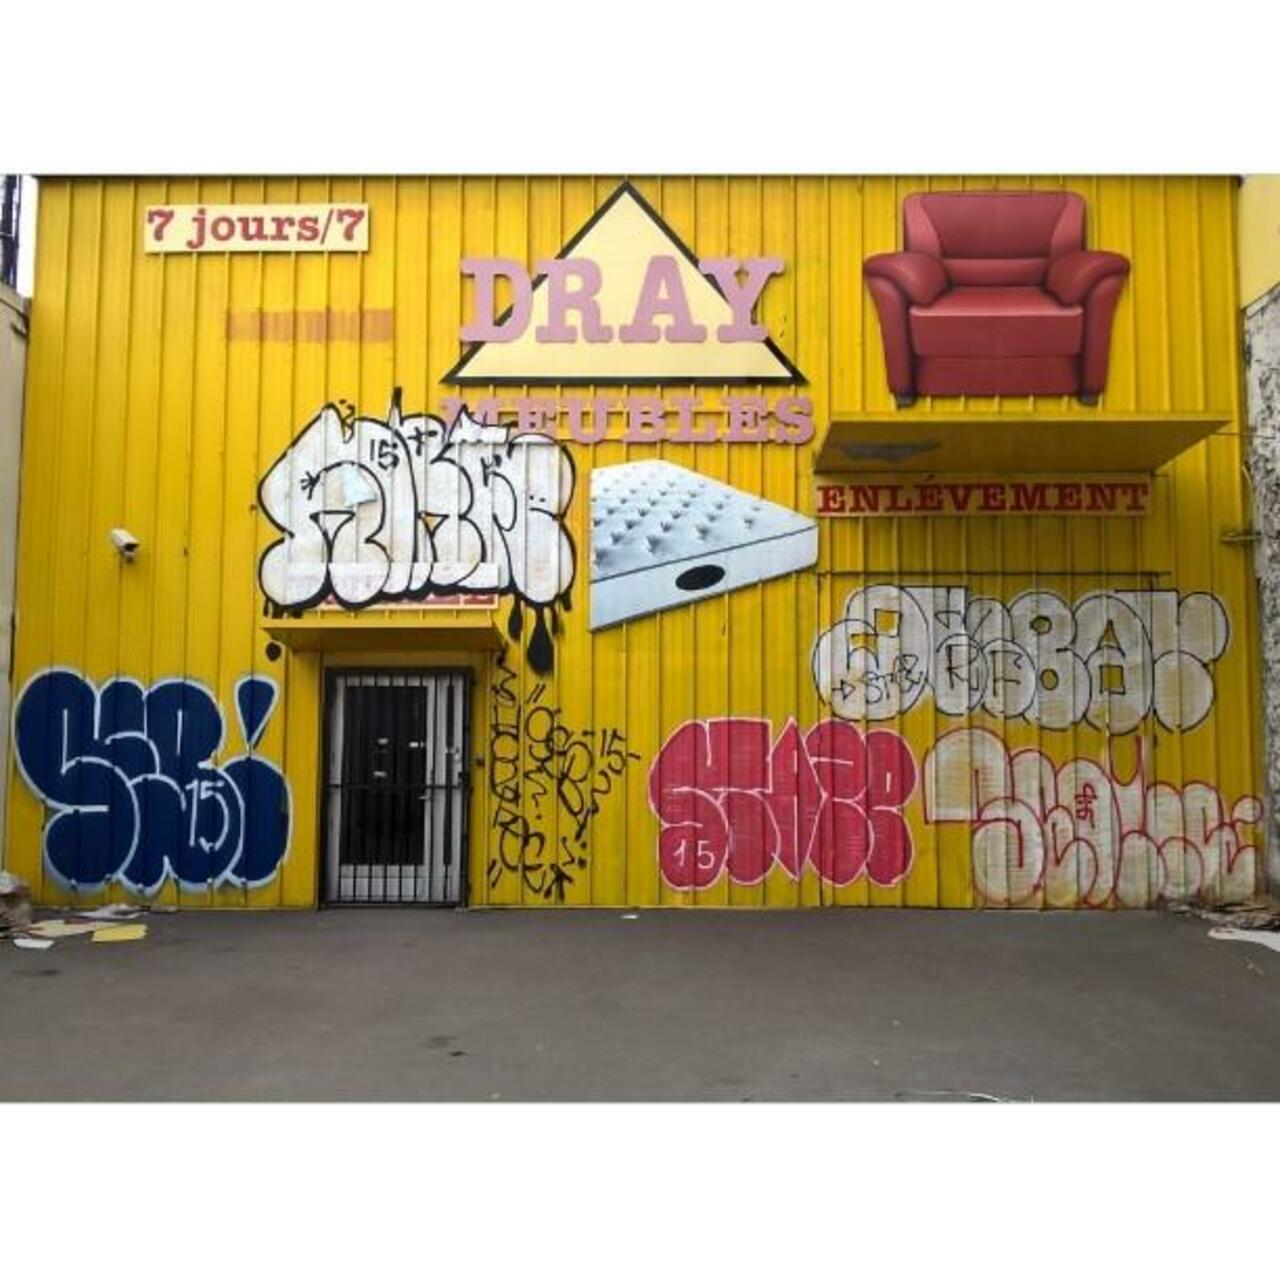 RT @StArtEverywhere: 7/7 DRAY SEB HORFE STAZE SEONE AKBAR
#streetart #graffiti #graff #art #fatcap #bombing #sprayart #spraycanart #wall… http://t.co/AcHpI4Yga5